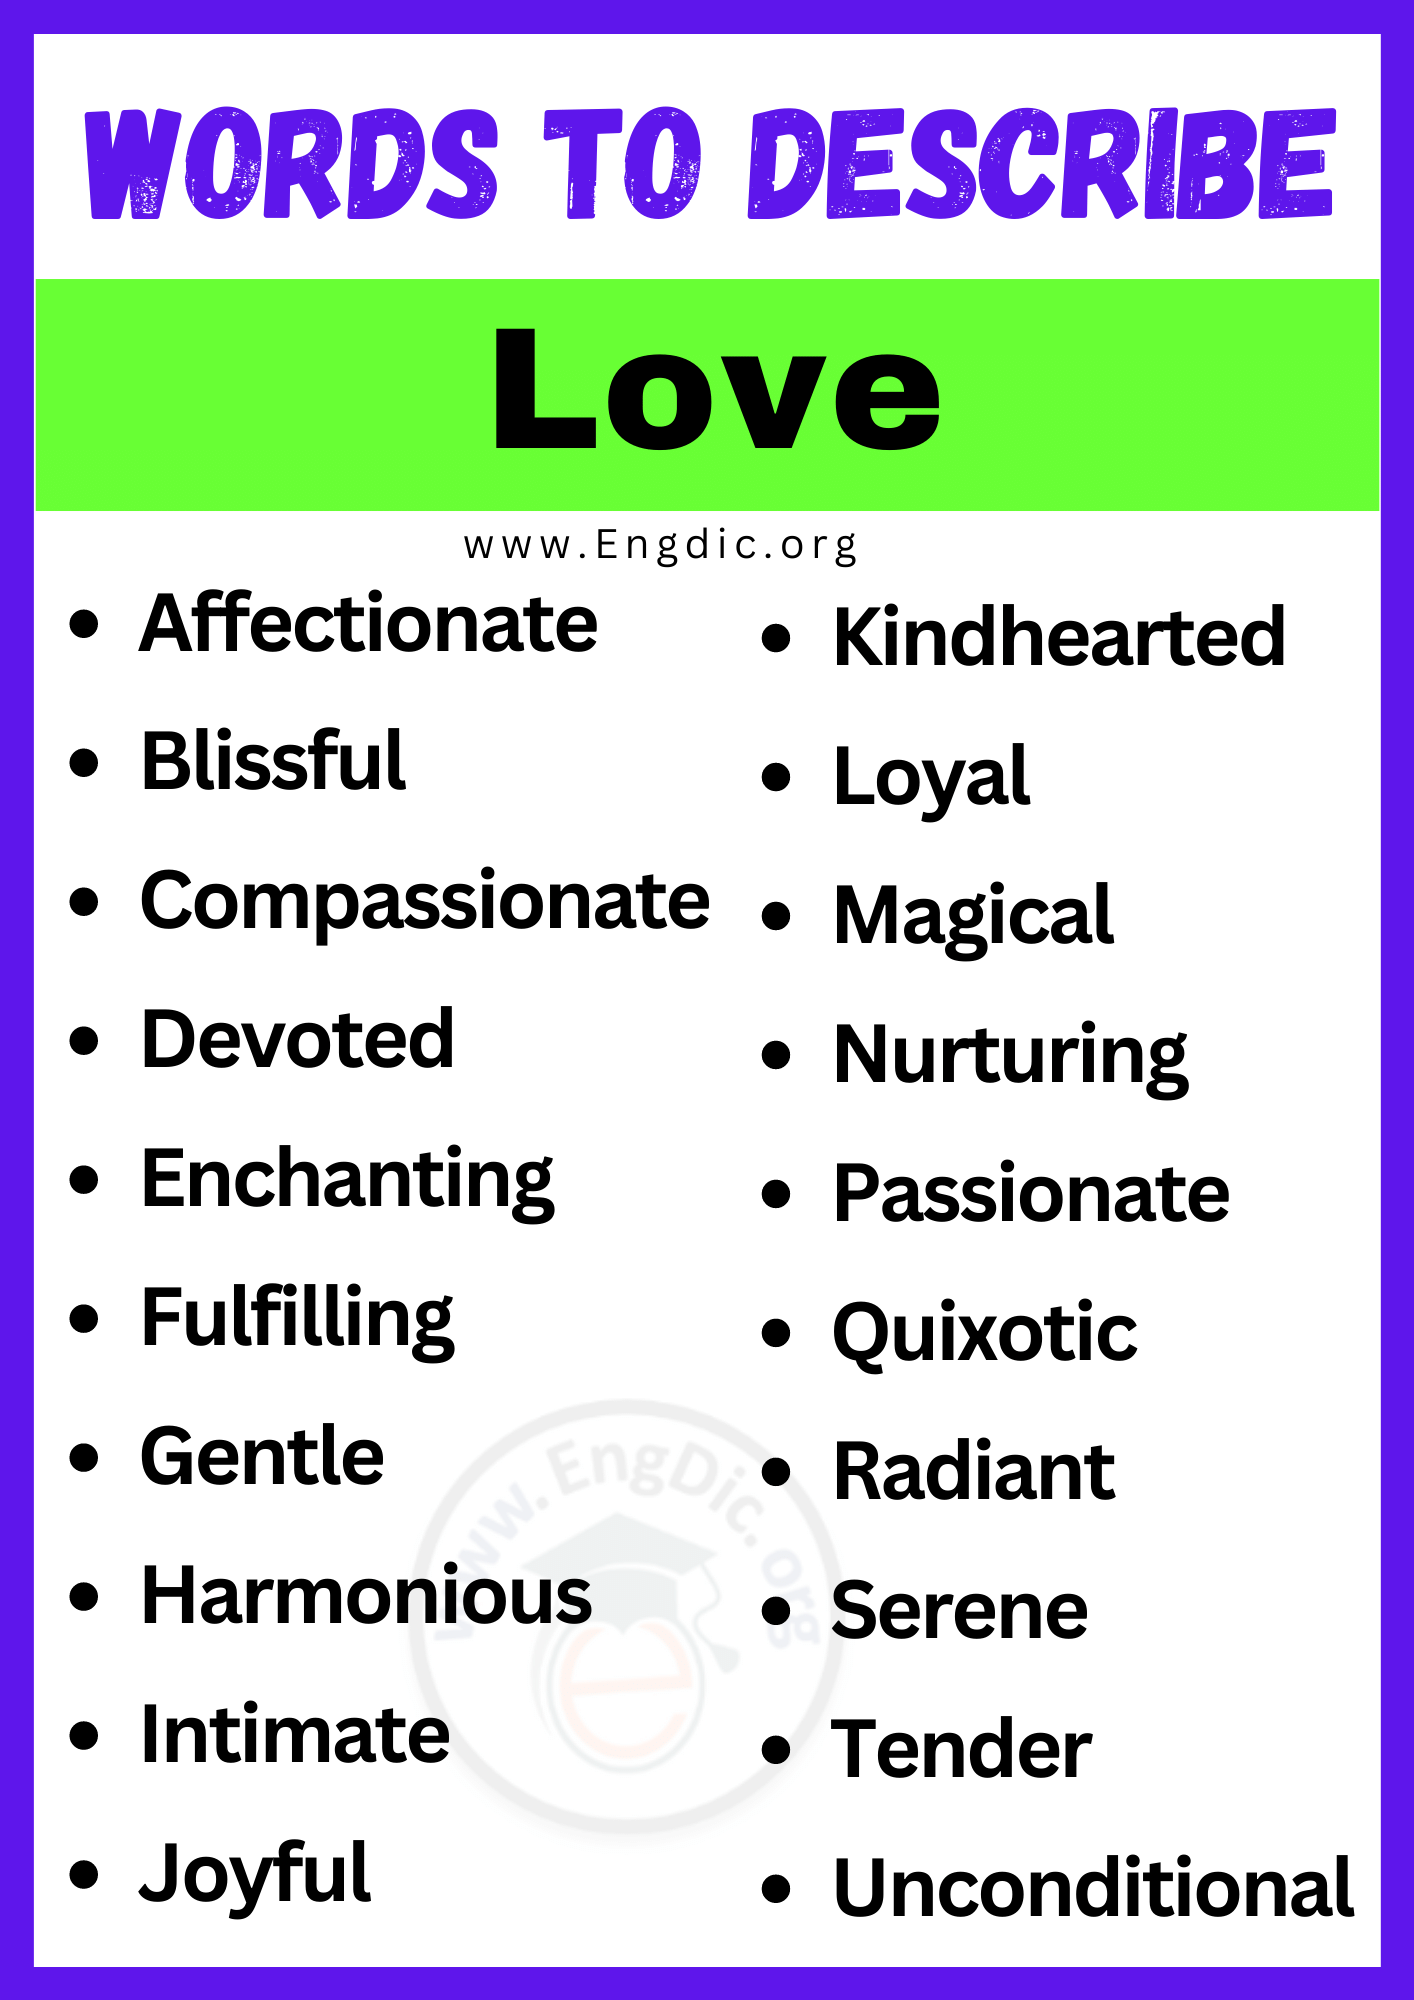 Words to Describe Love